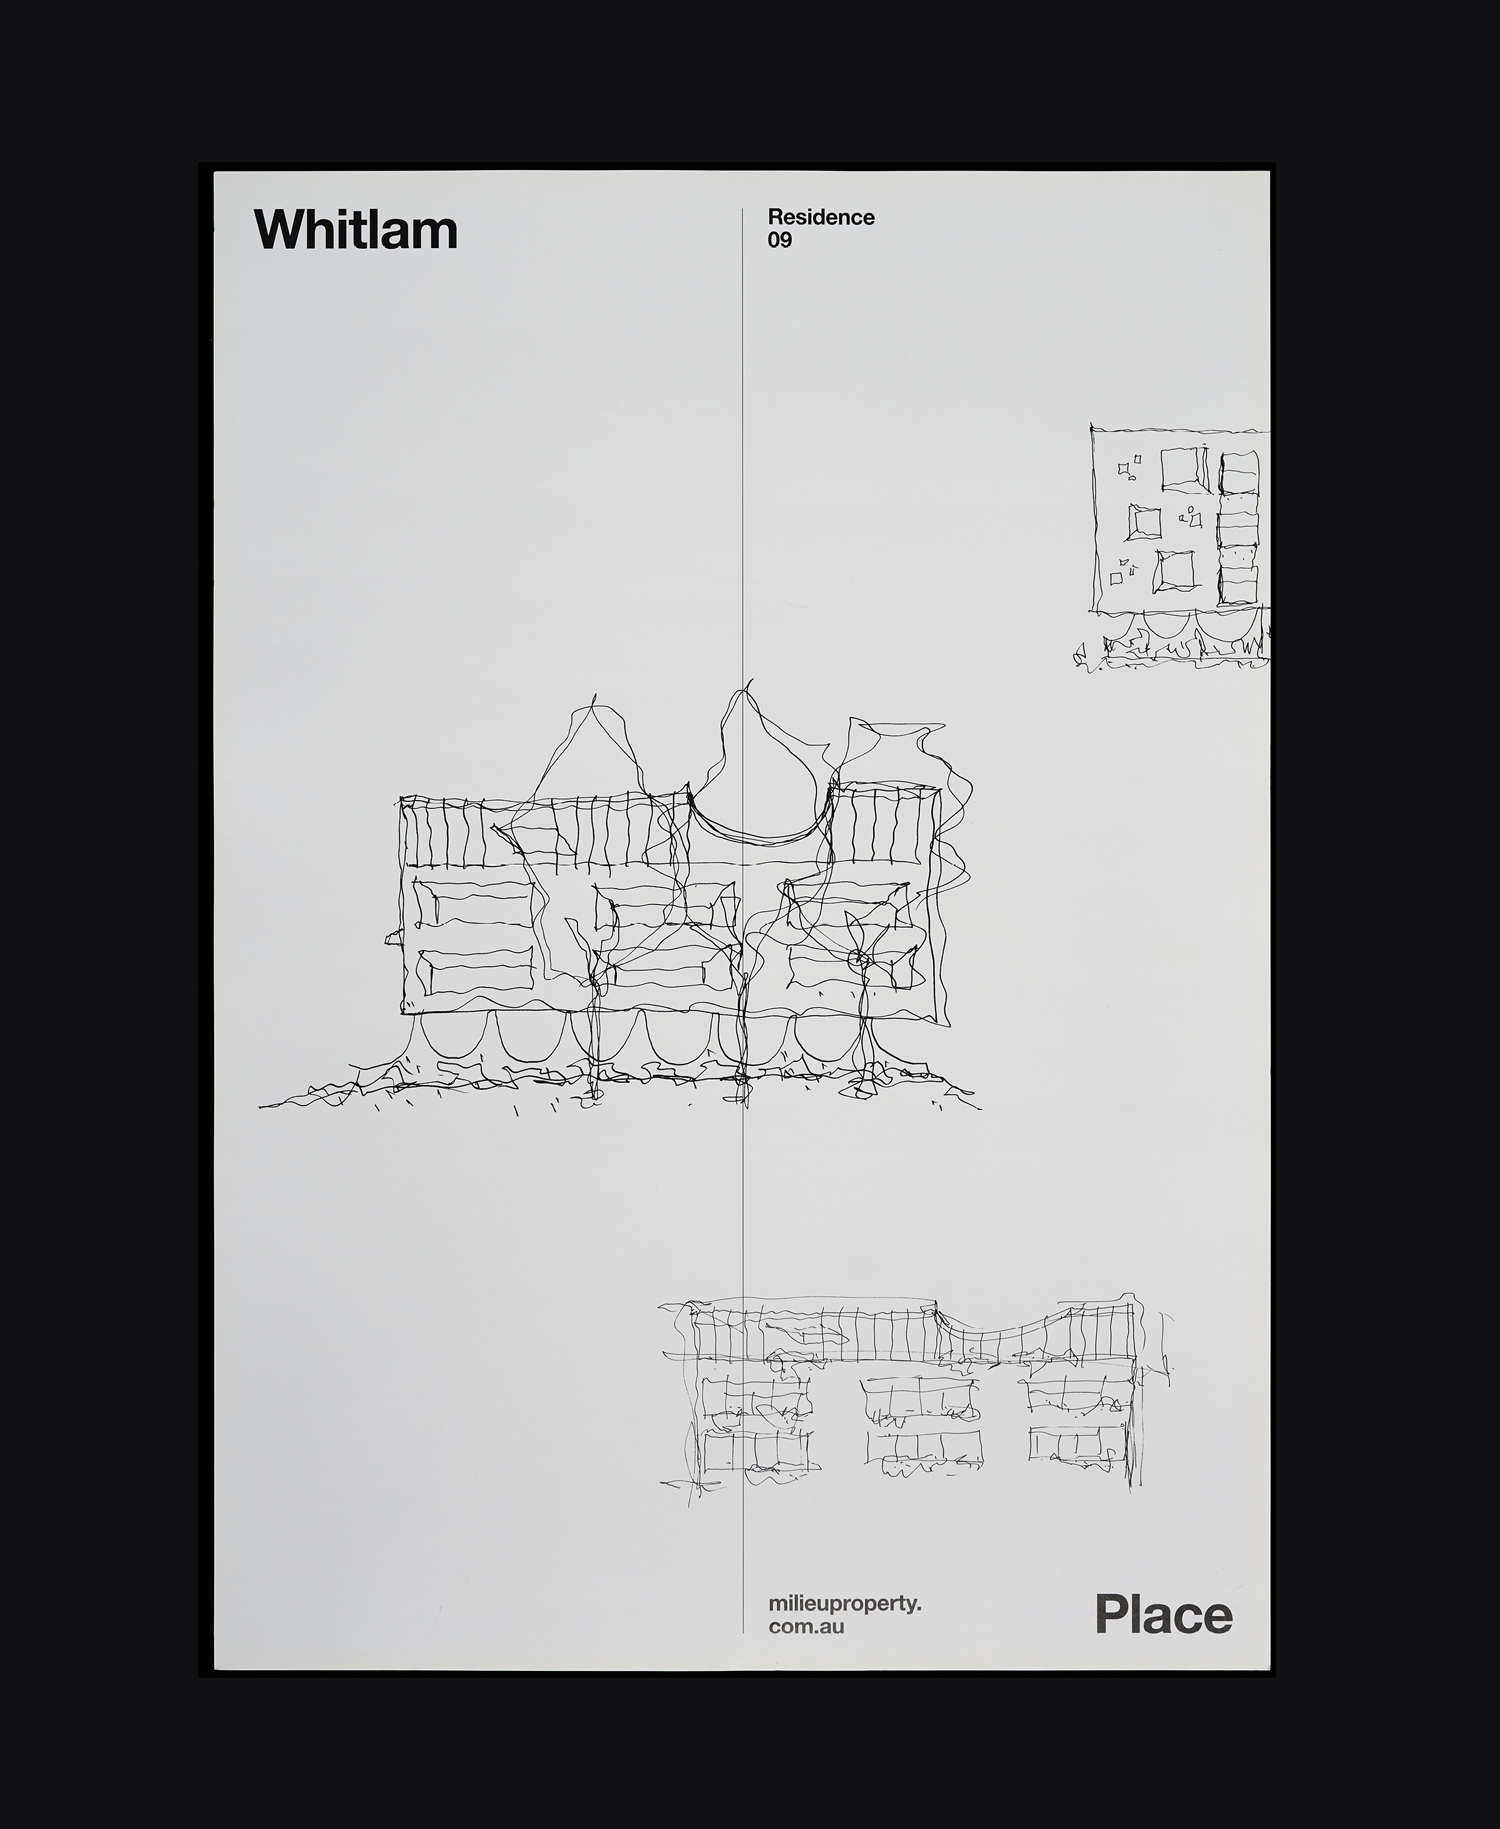 Illustration designed by Studio Hi Ho for Fitzroy development Whitlam Place